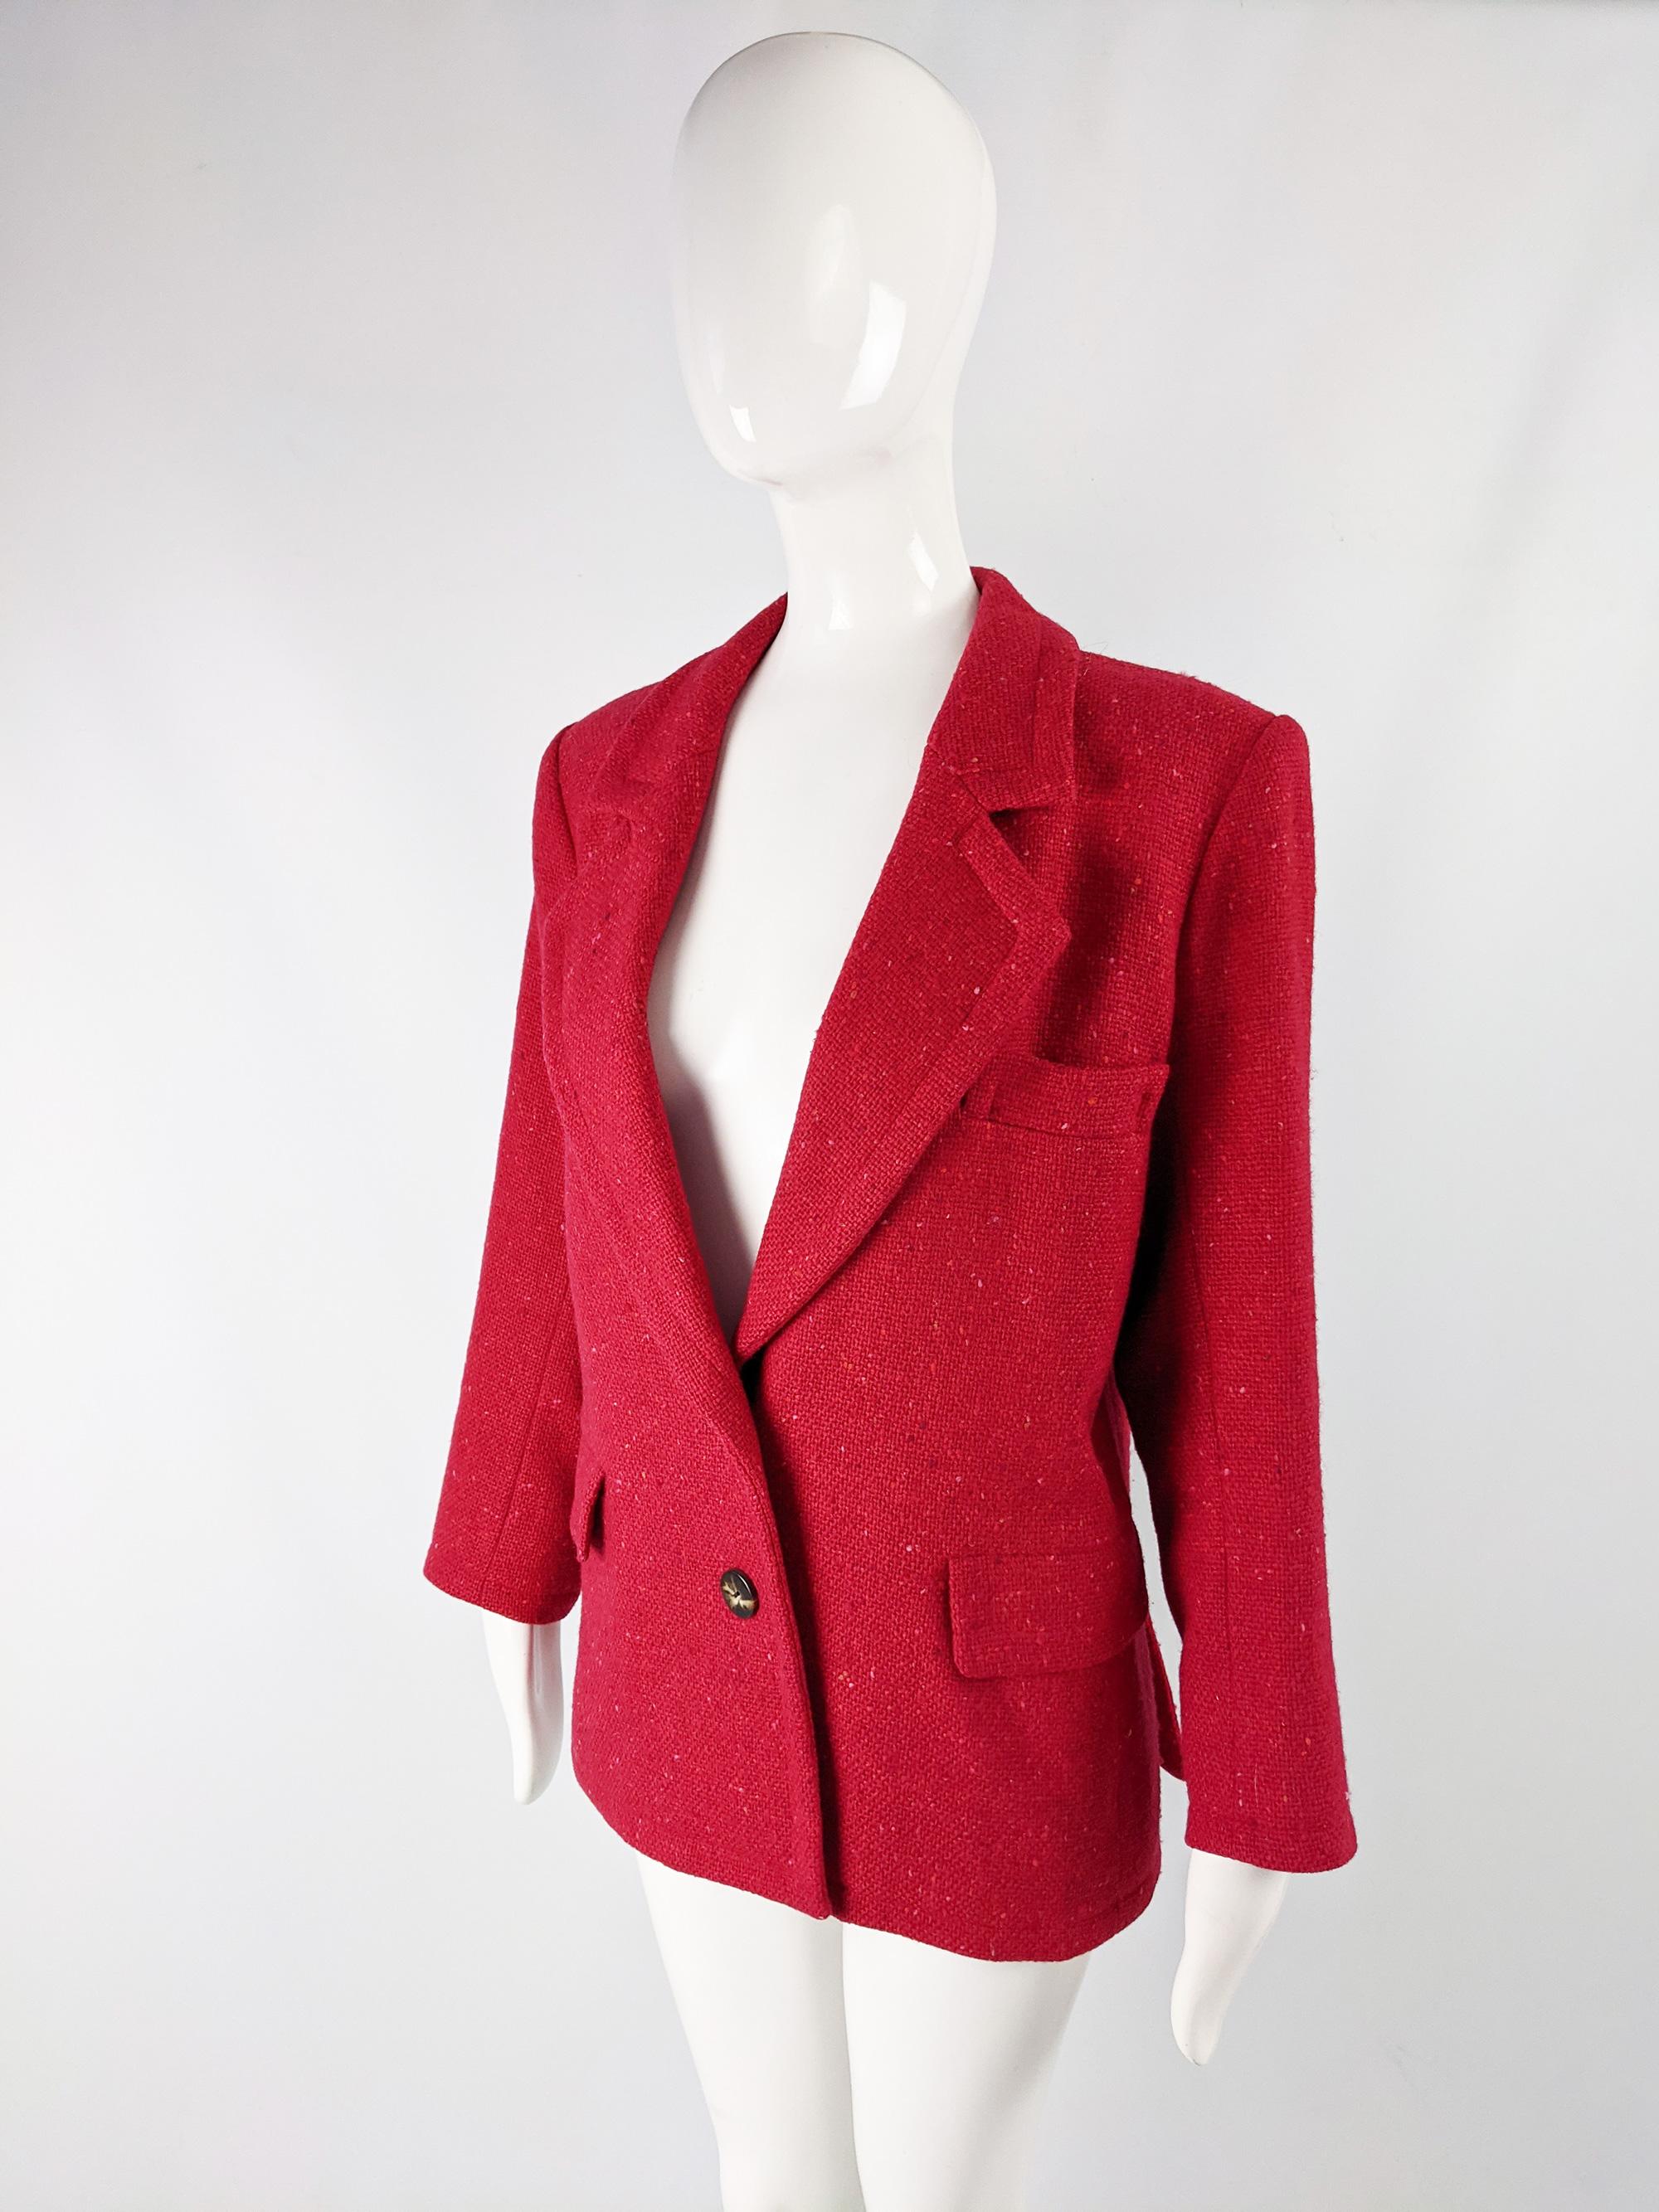 Women's Yves Saint Laurent Vintage Rive Gauche Blazer Jacket 1980s